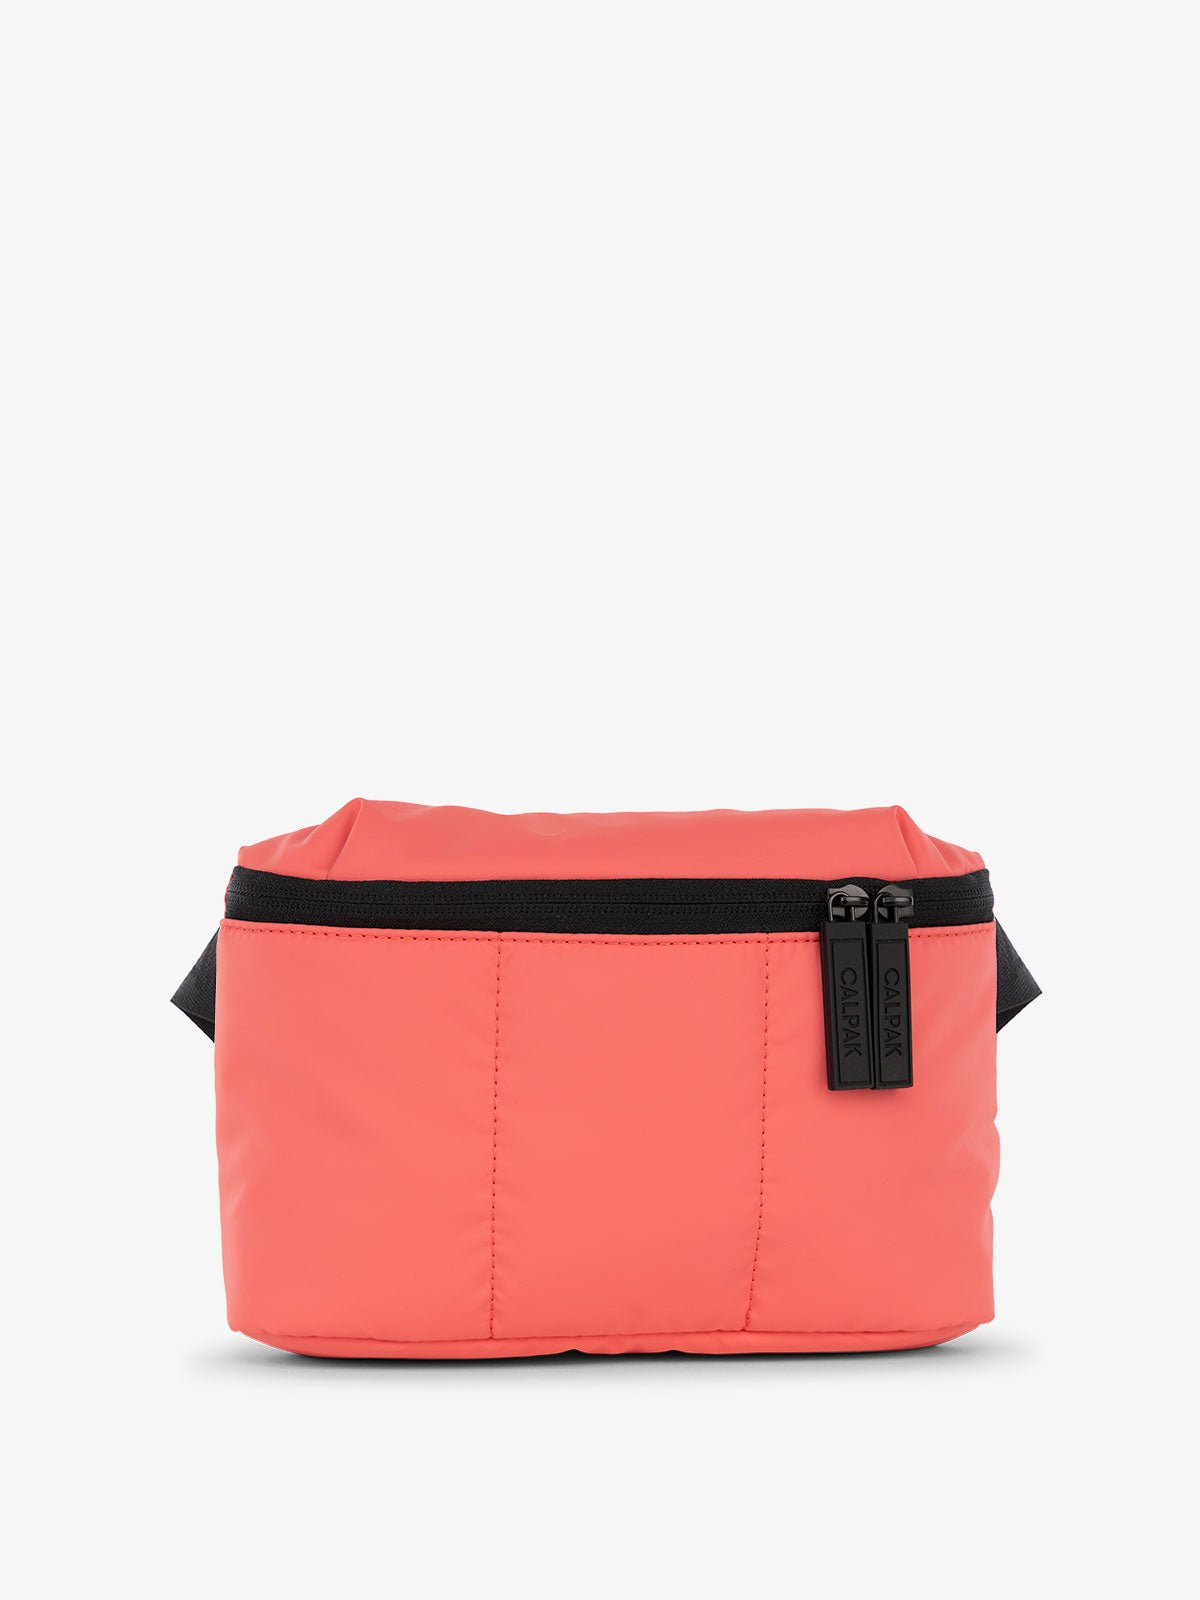 CALPAK Luka Mini Belt Bag with soft water-resistant exterior in watermelon